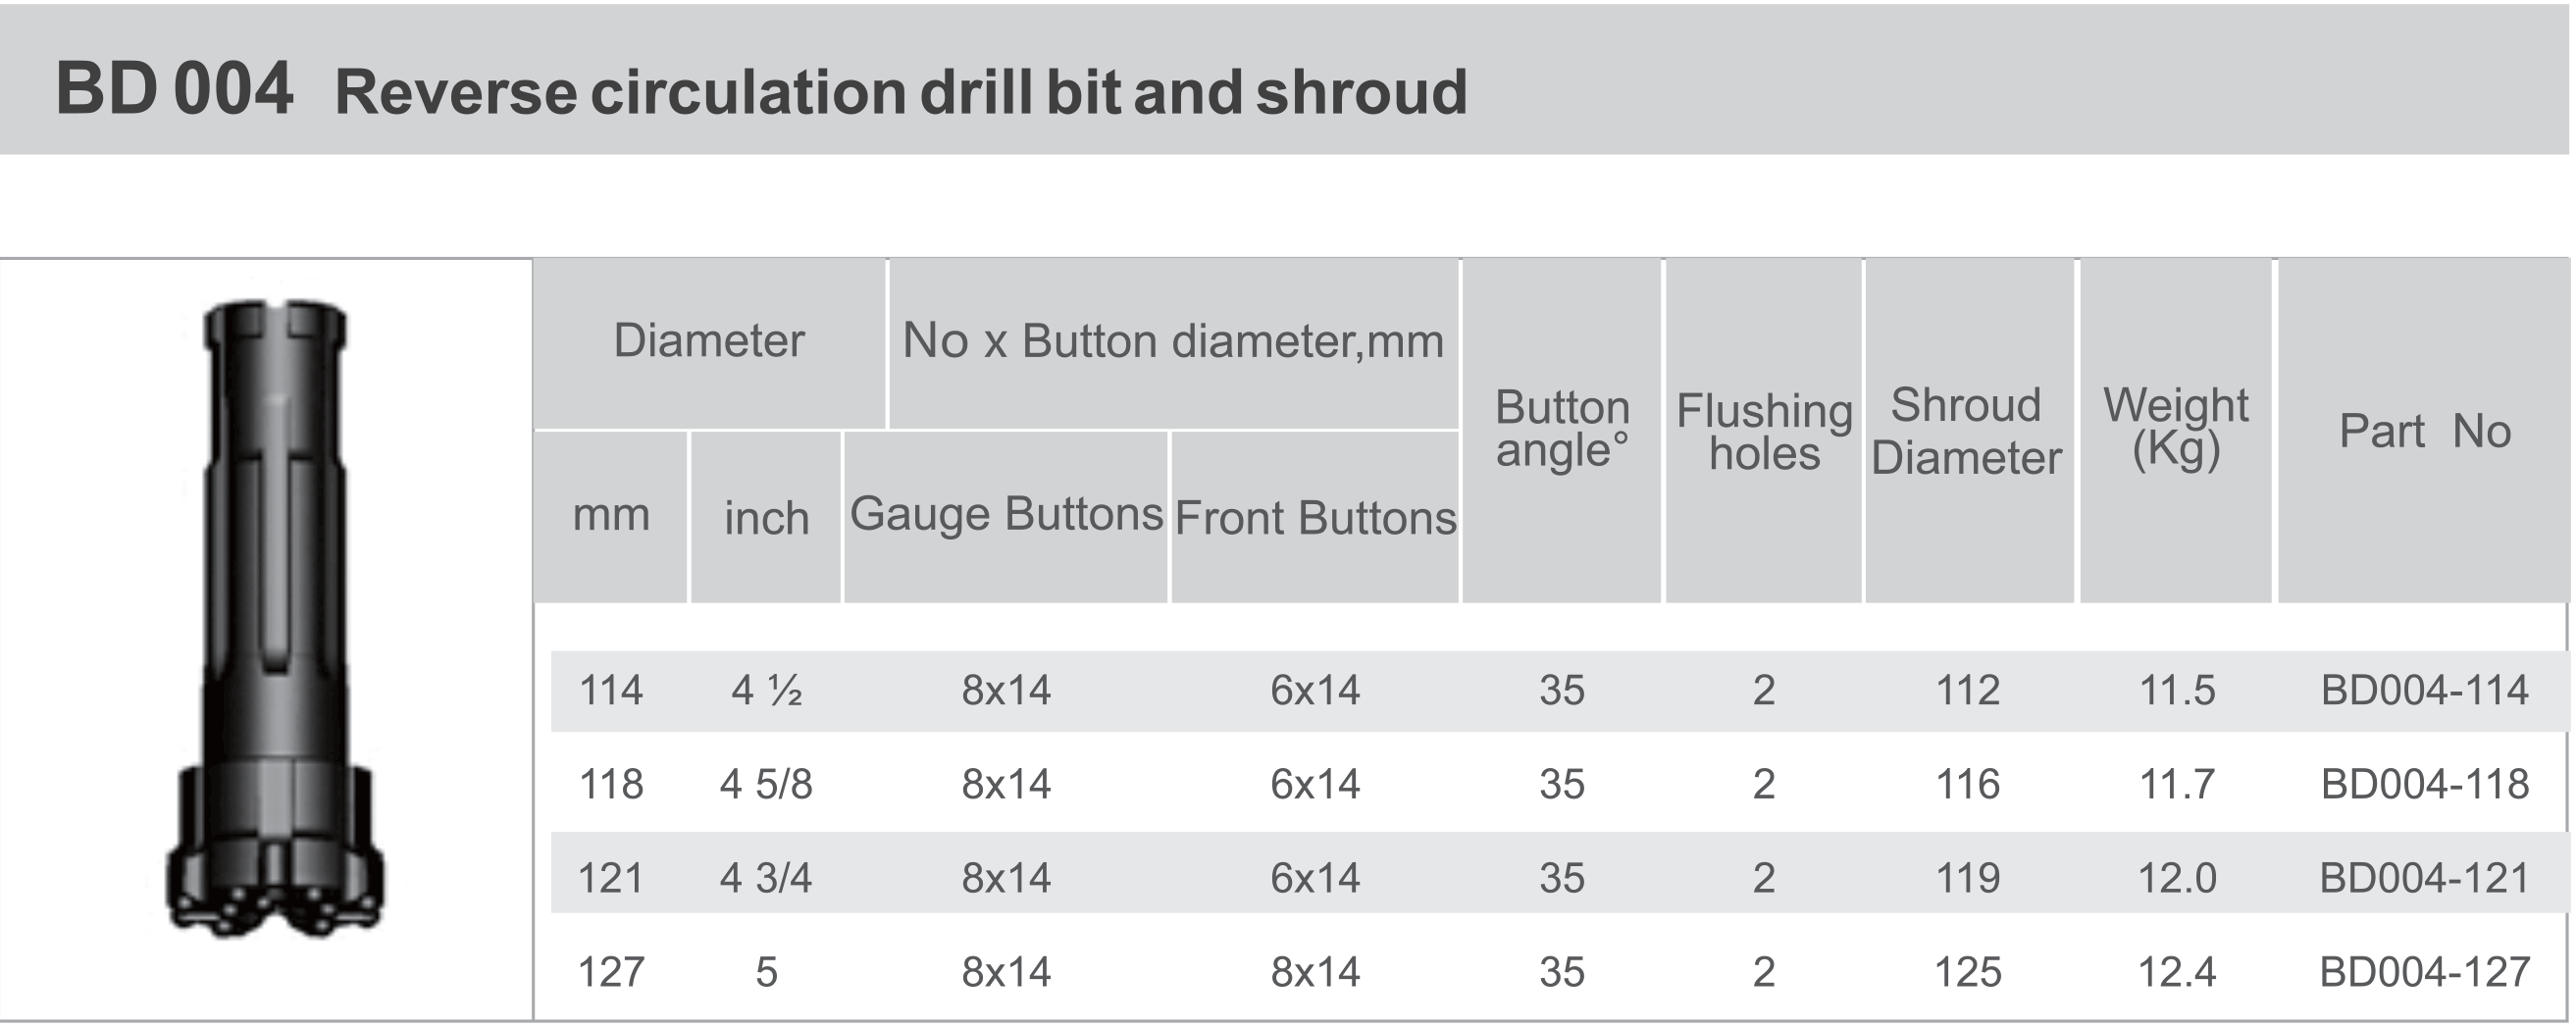 Black Diamond Drilling BD004 RC Reverse Circulation Drill Bit Shroud technical data